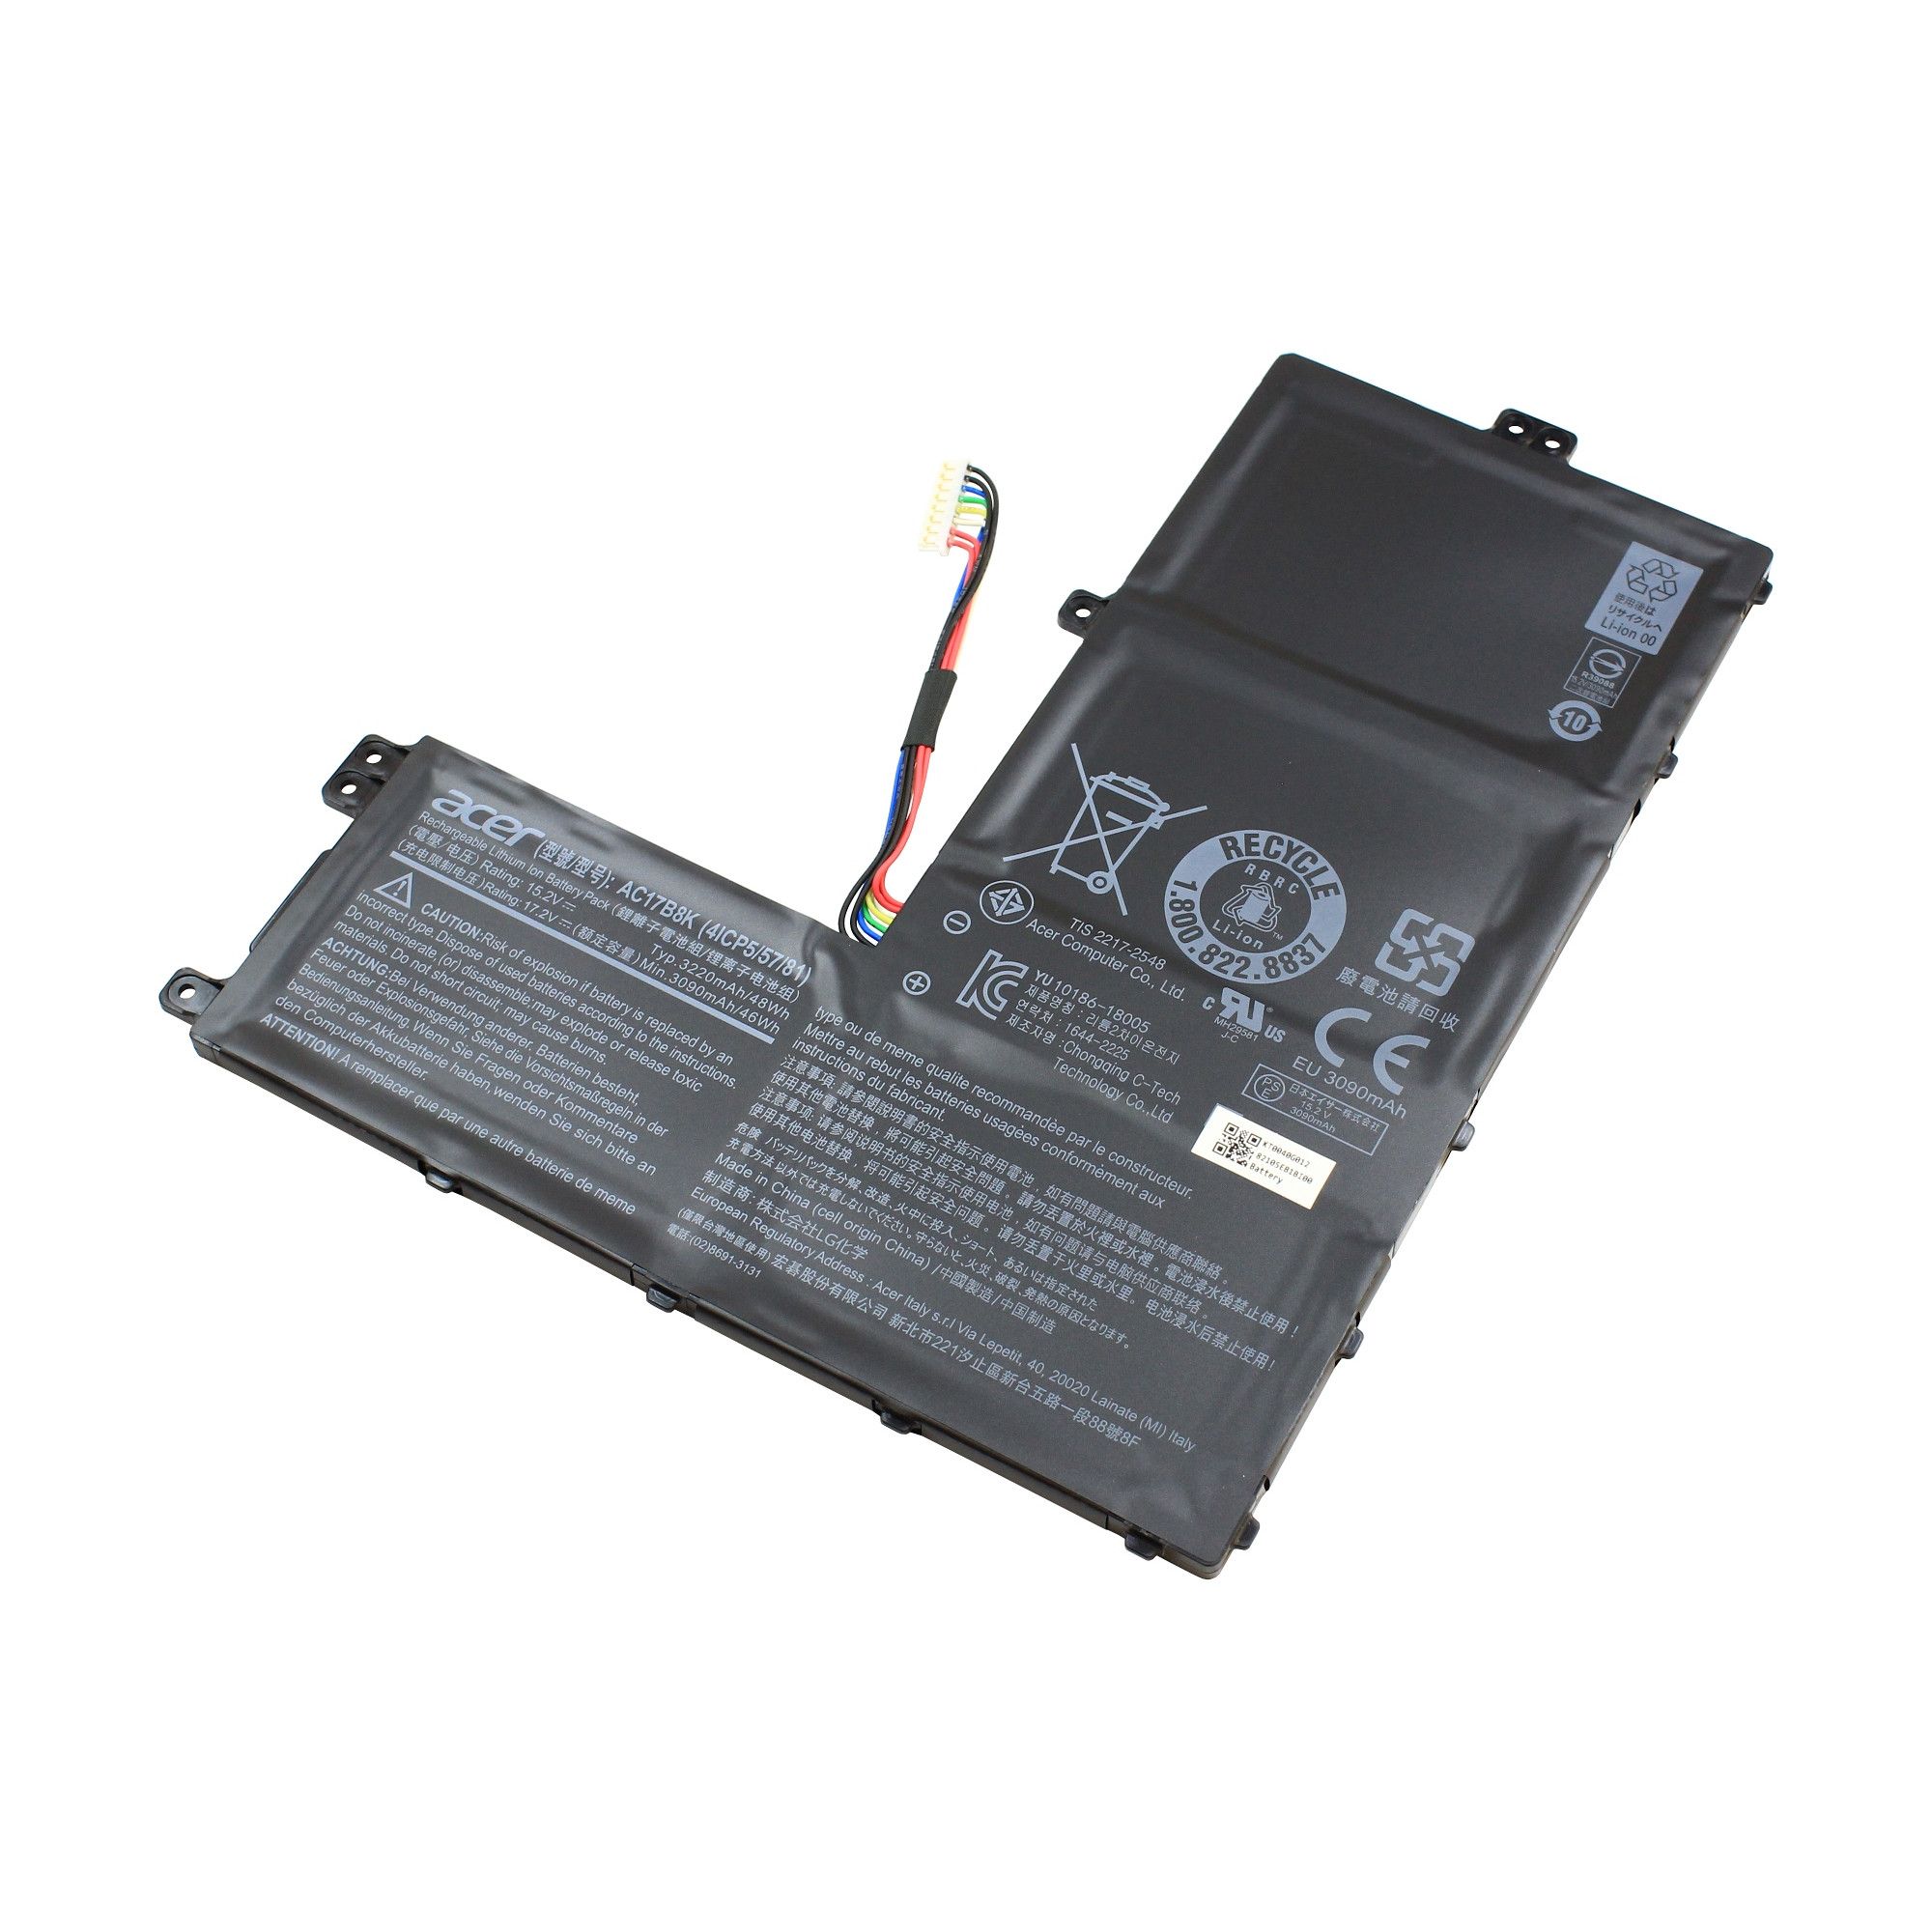 Batterie originale Acer AC17B8K 15.2V 3220mAh pour ordinateur portable Acer SF315-52G-51HV, Swift 3 SF315-52G-531A série